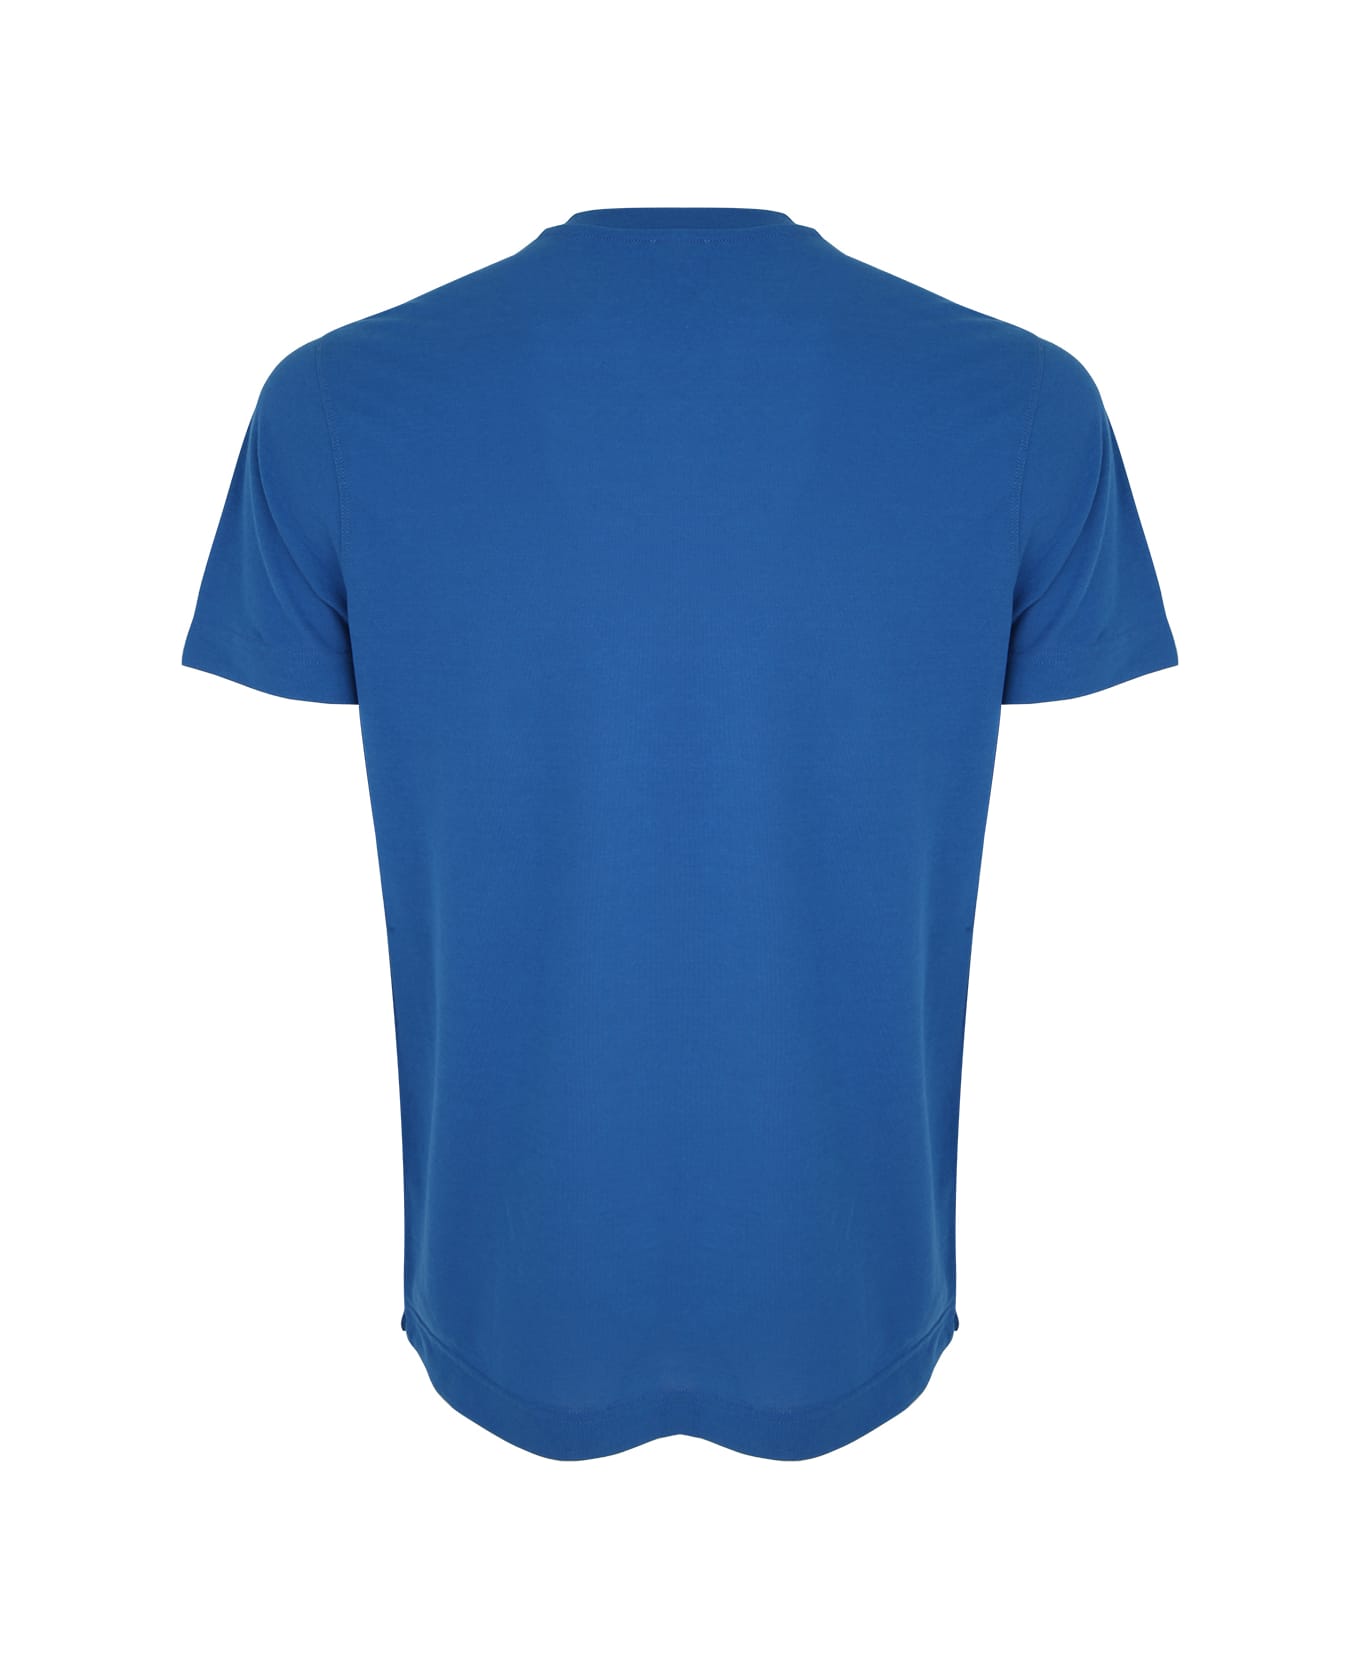 Zanone Short Sleeves T-shirt - Light Blue